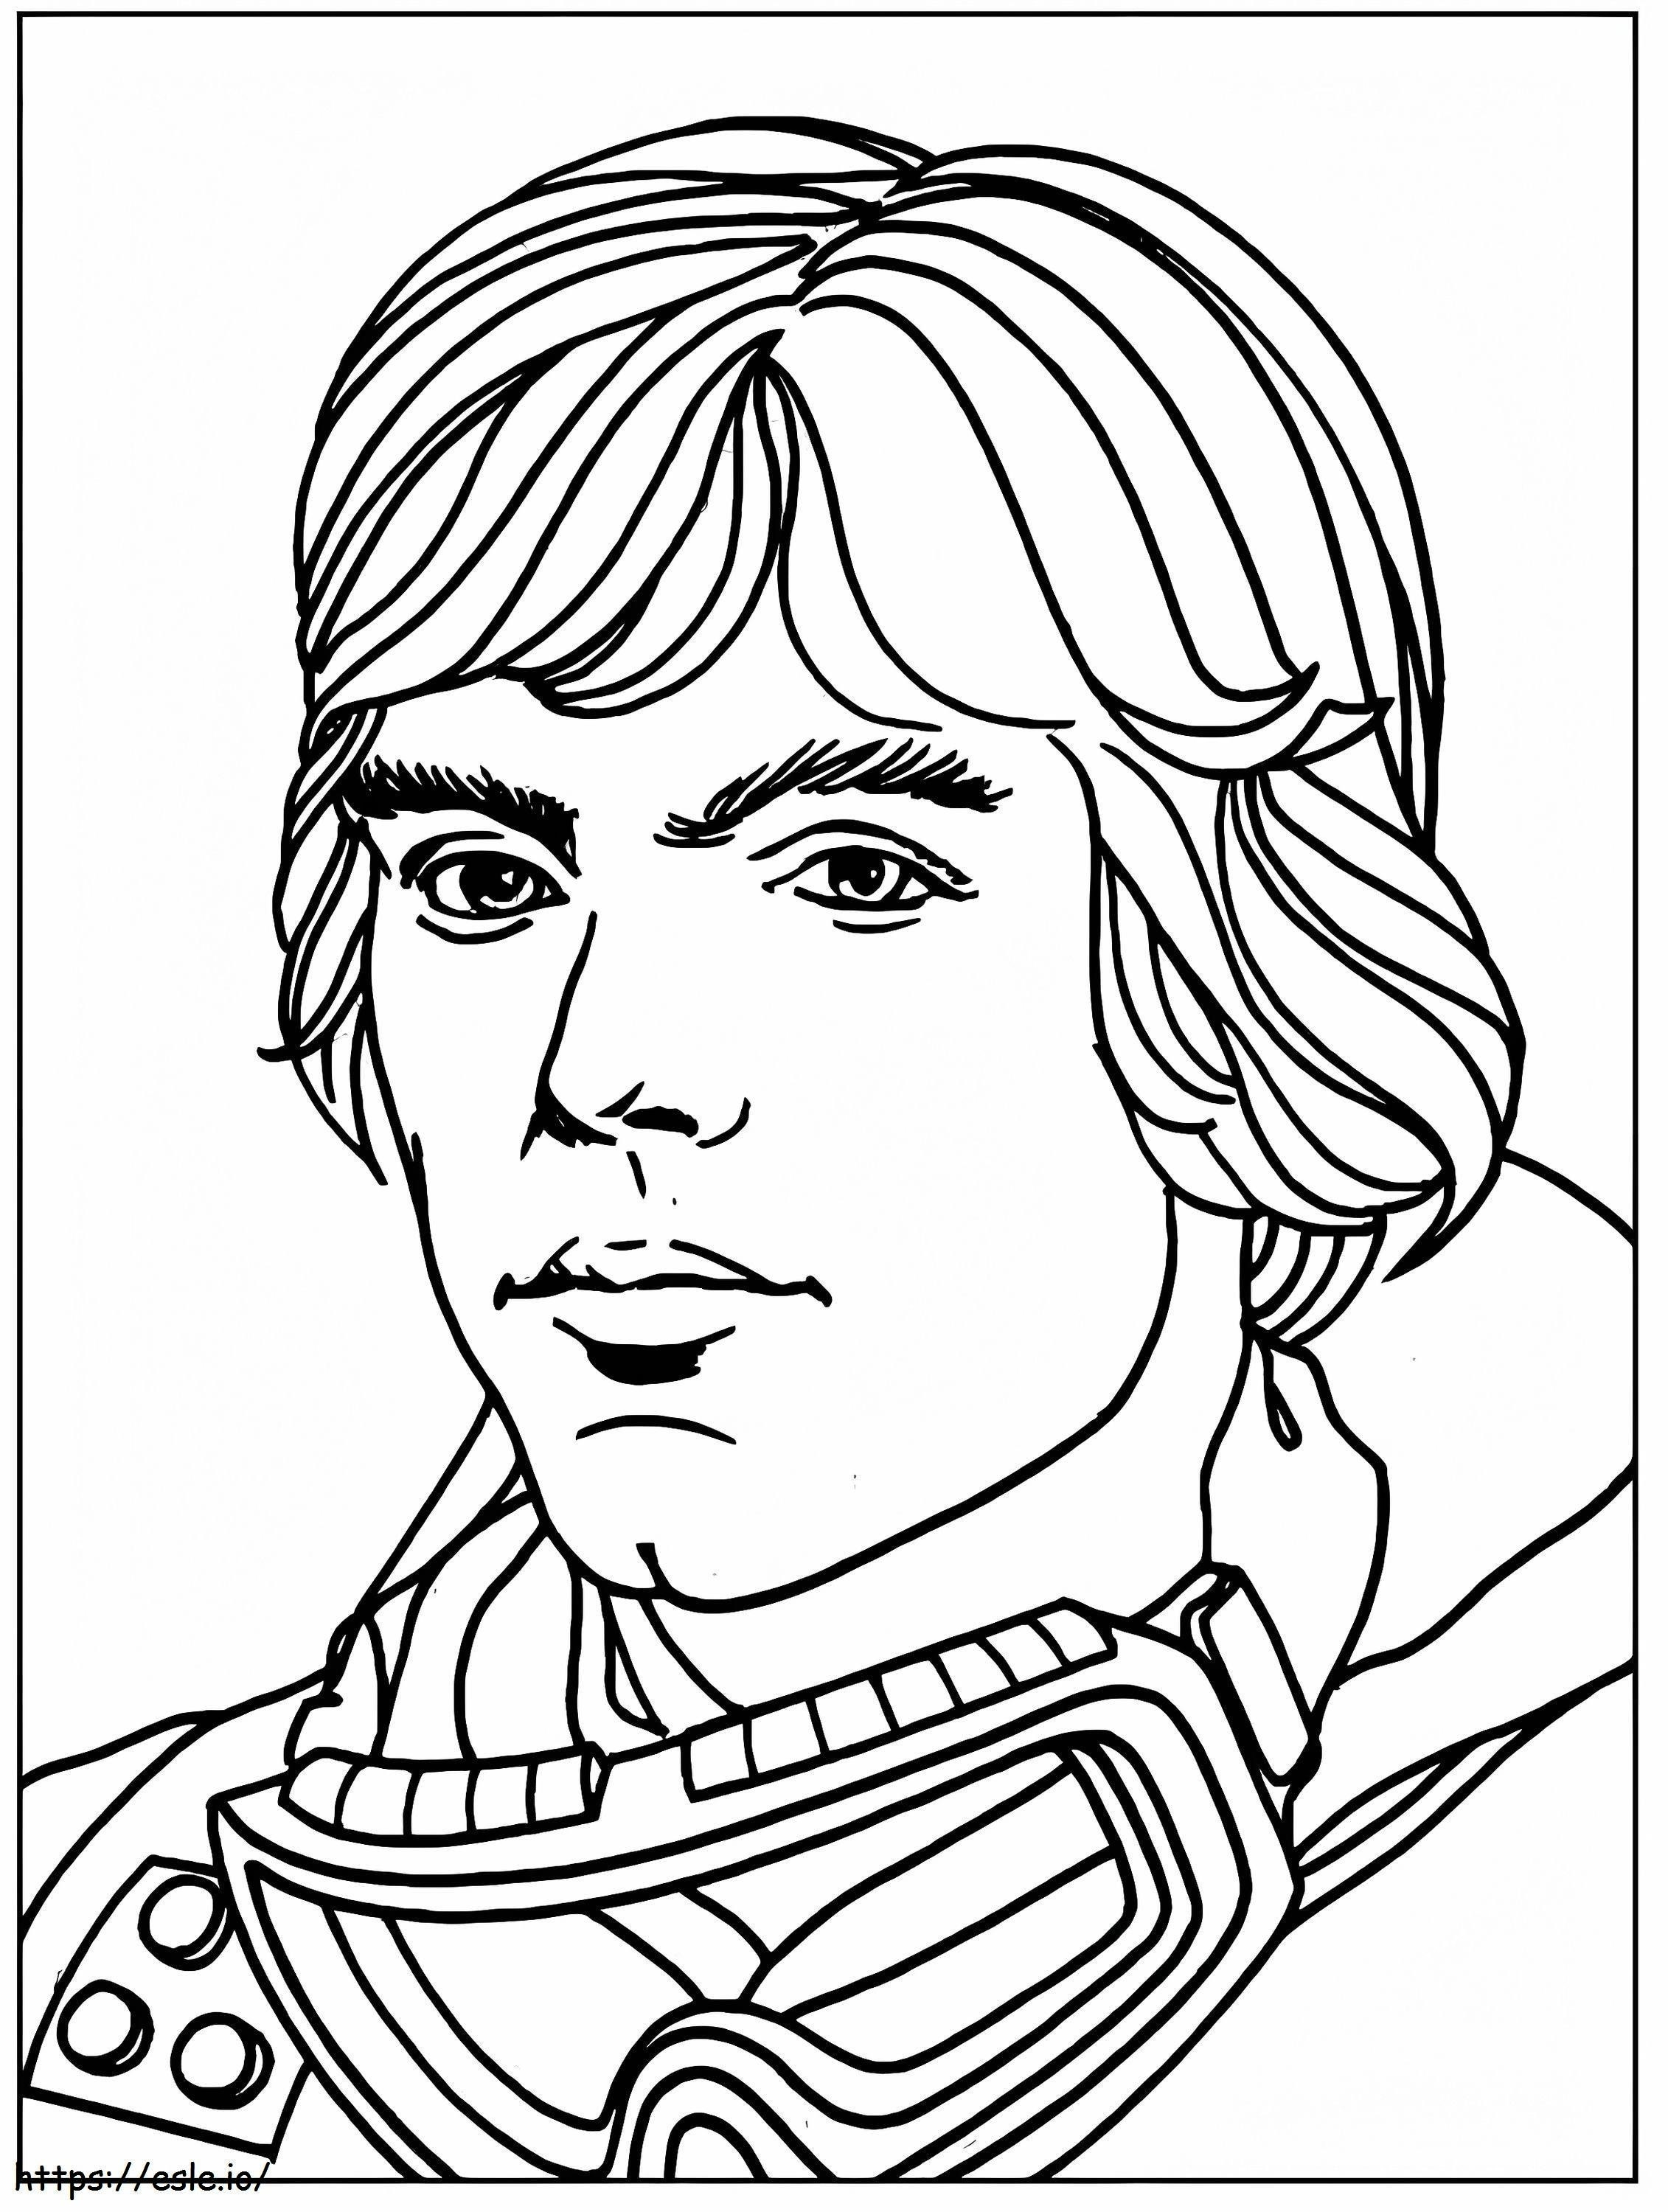 Cara De Luke Skywalker coloring page